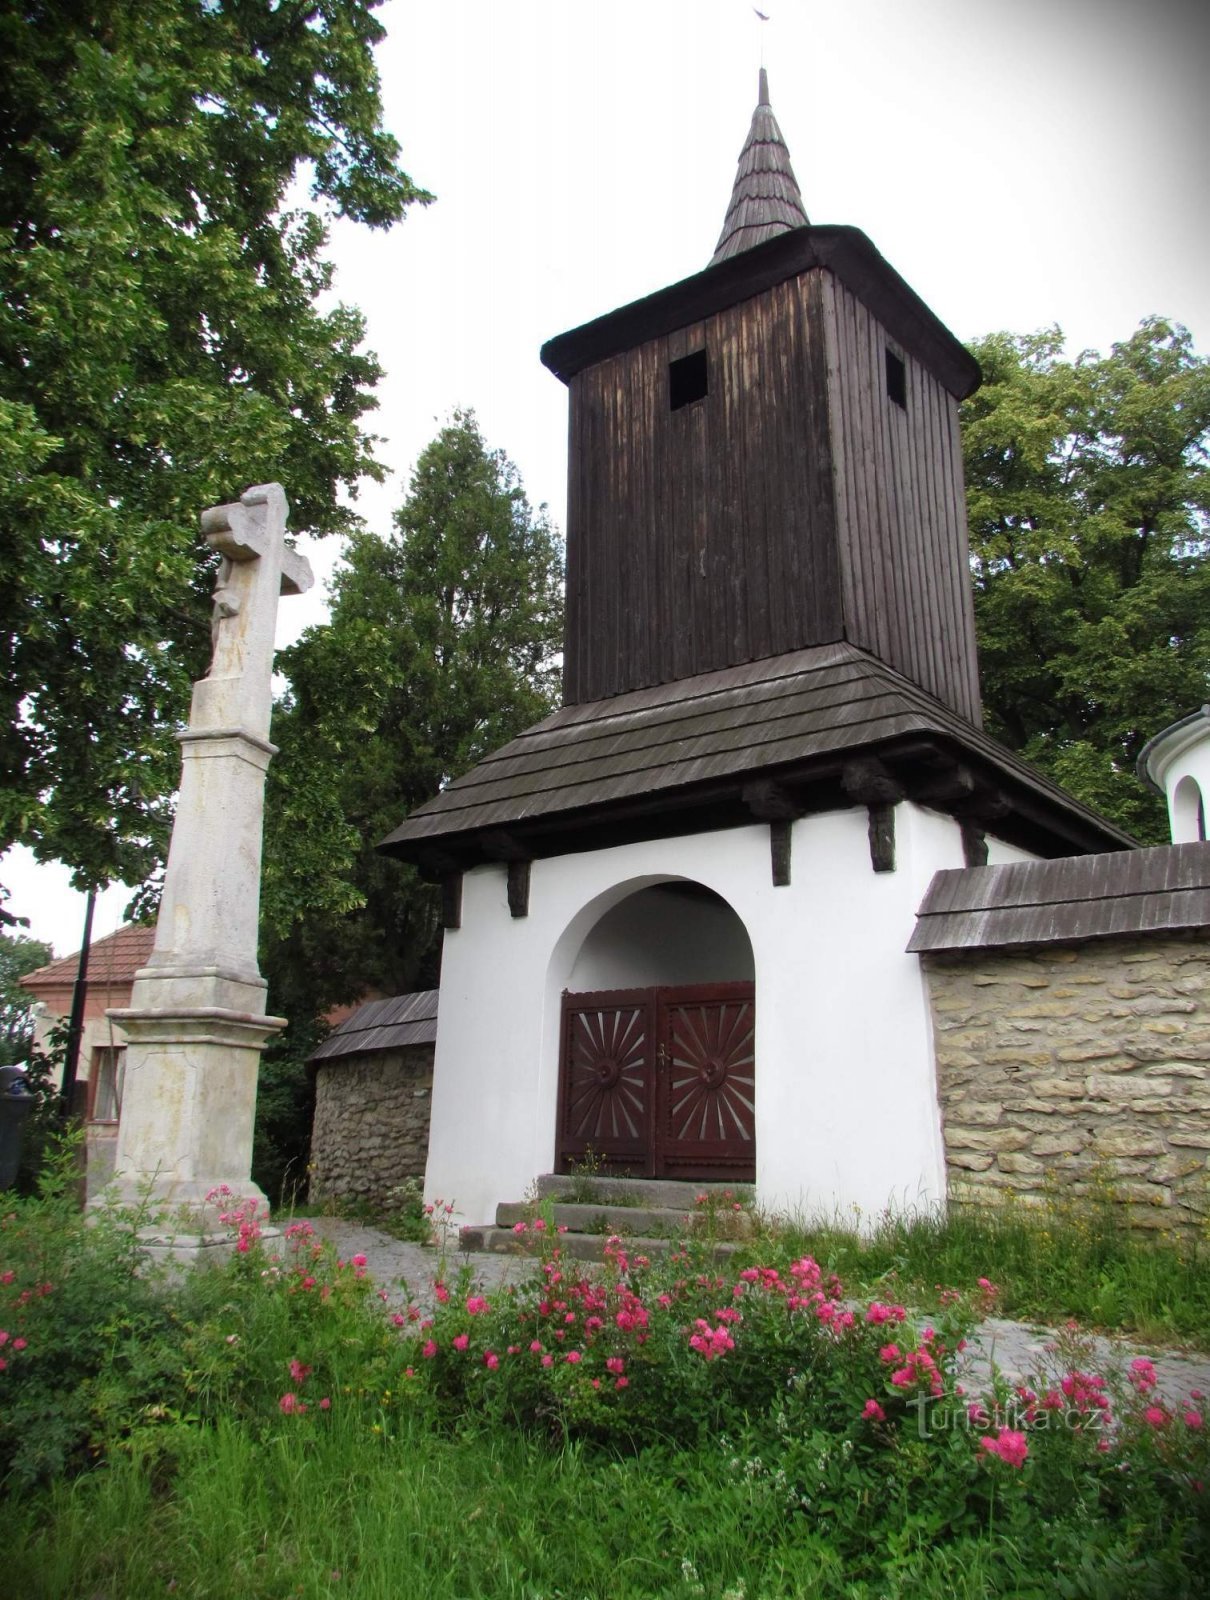 Česká Třebová - het meest gedenkwaardige sacrale gebouw